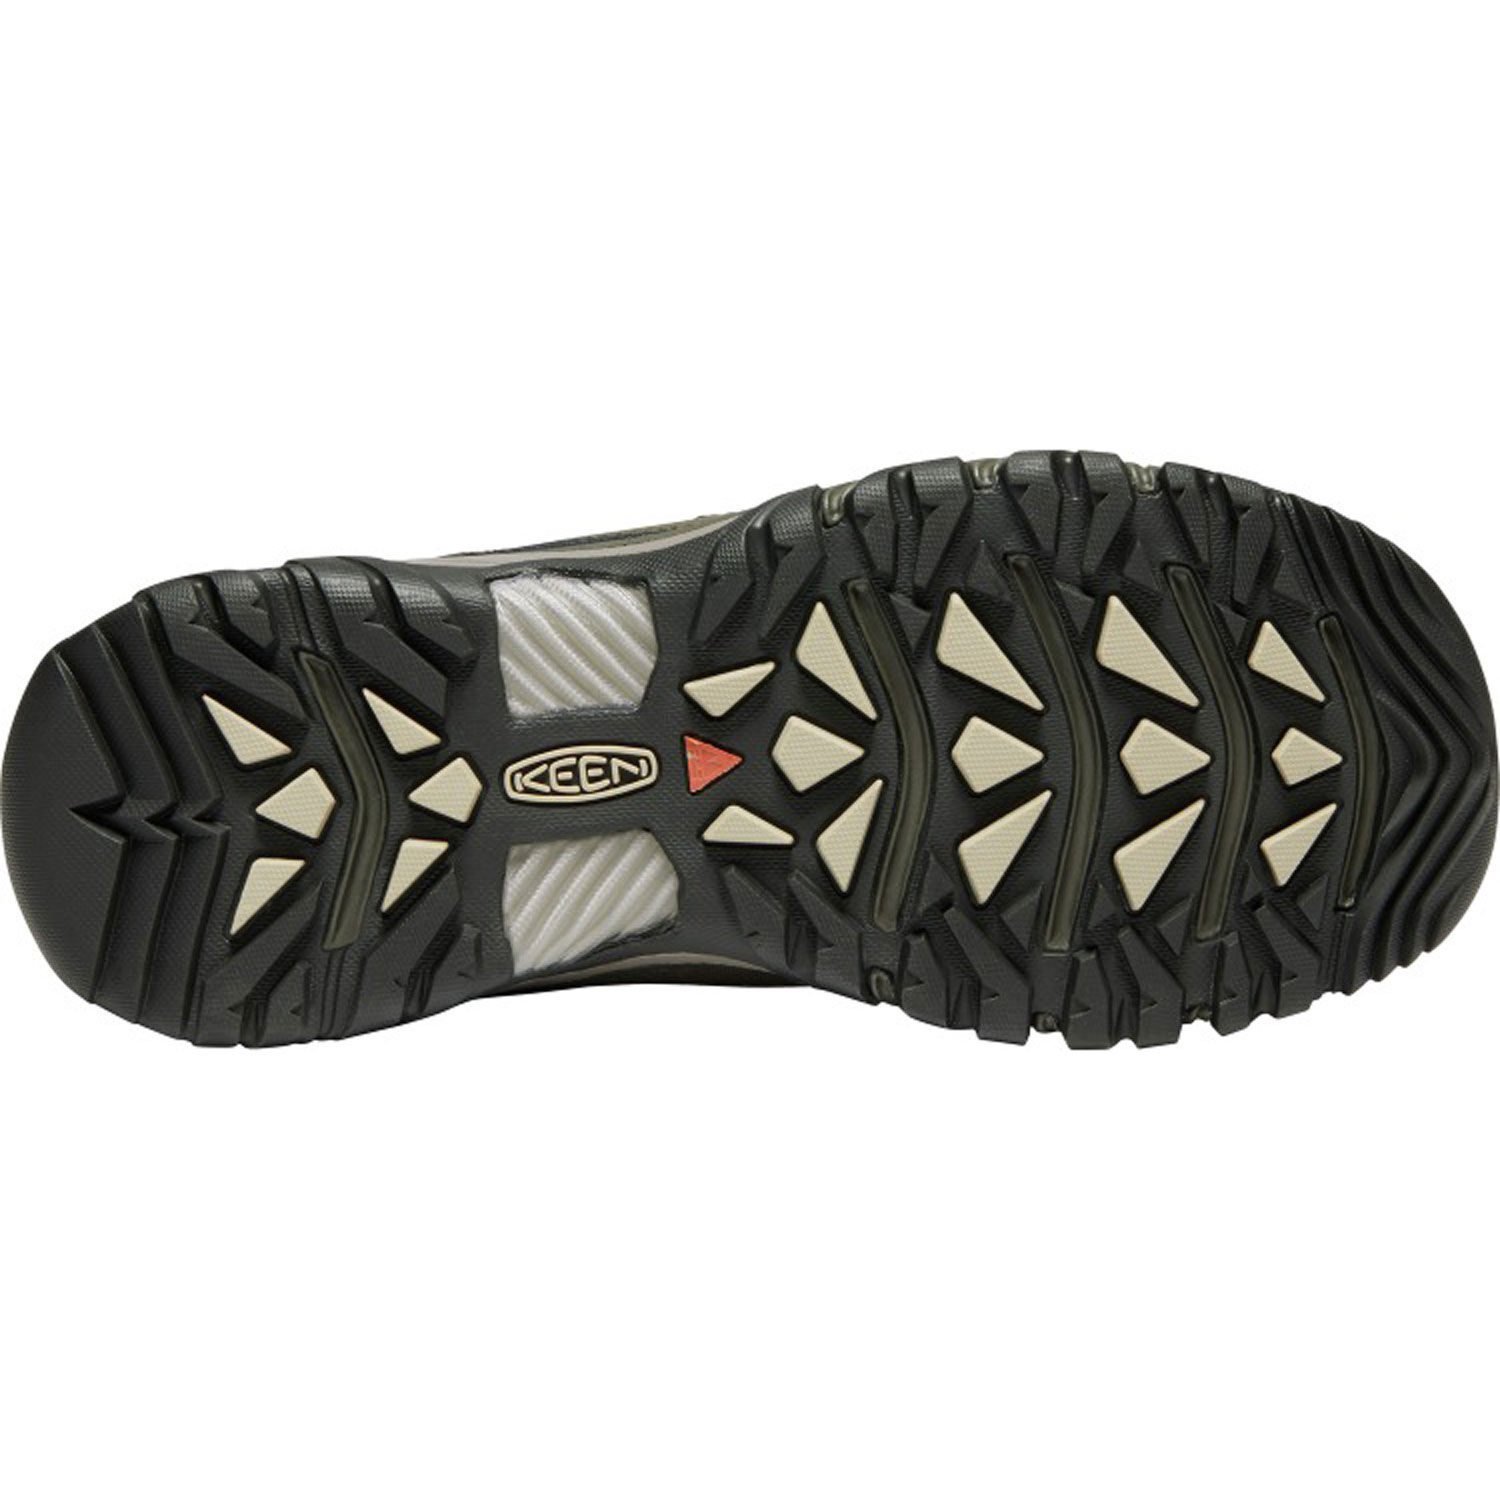 Men's KEEN Targhee III Leather Waterproof Shoes | Duluth Trading